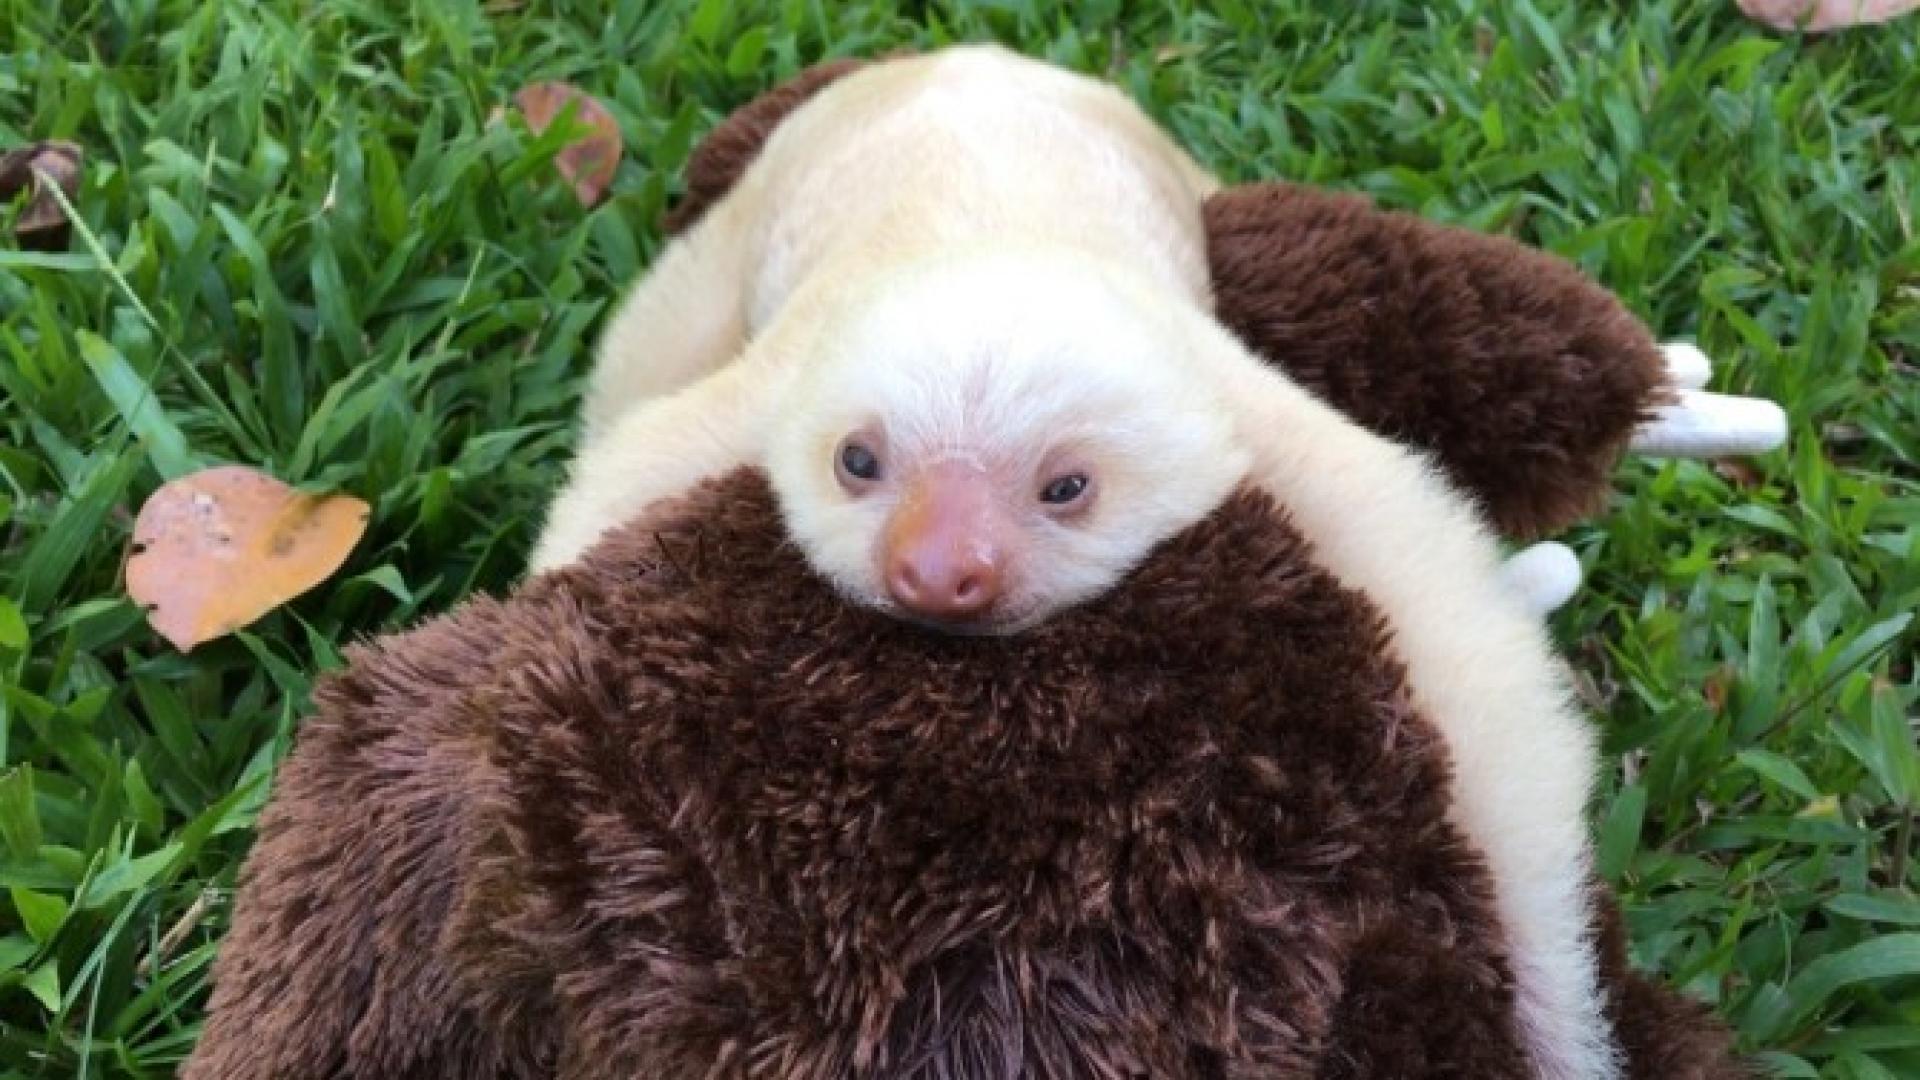 baby sloth with stuffed animal